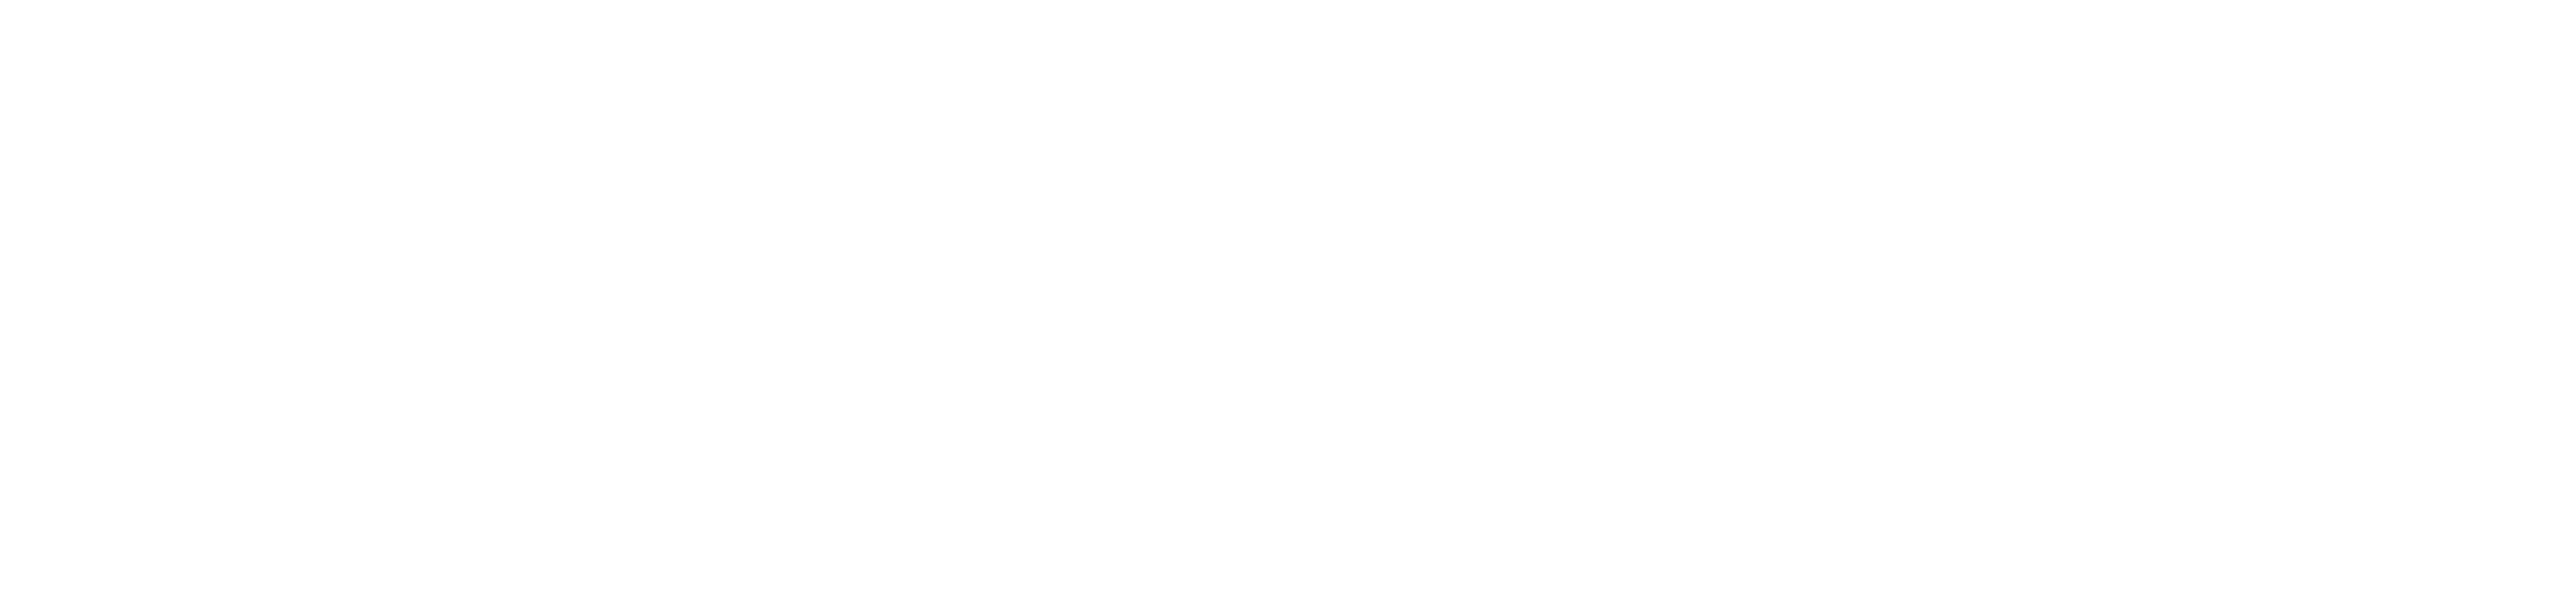 CBRE Group
 logo for dark backgrounds (transparent PNG)